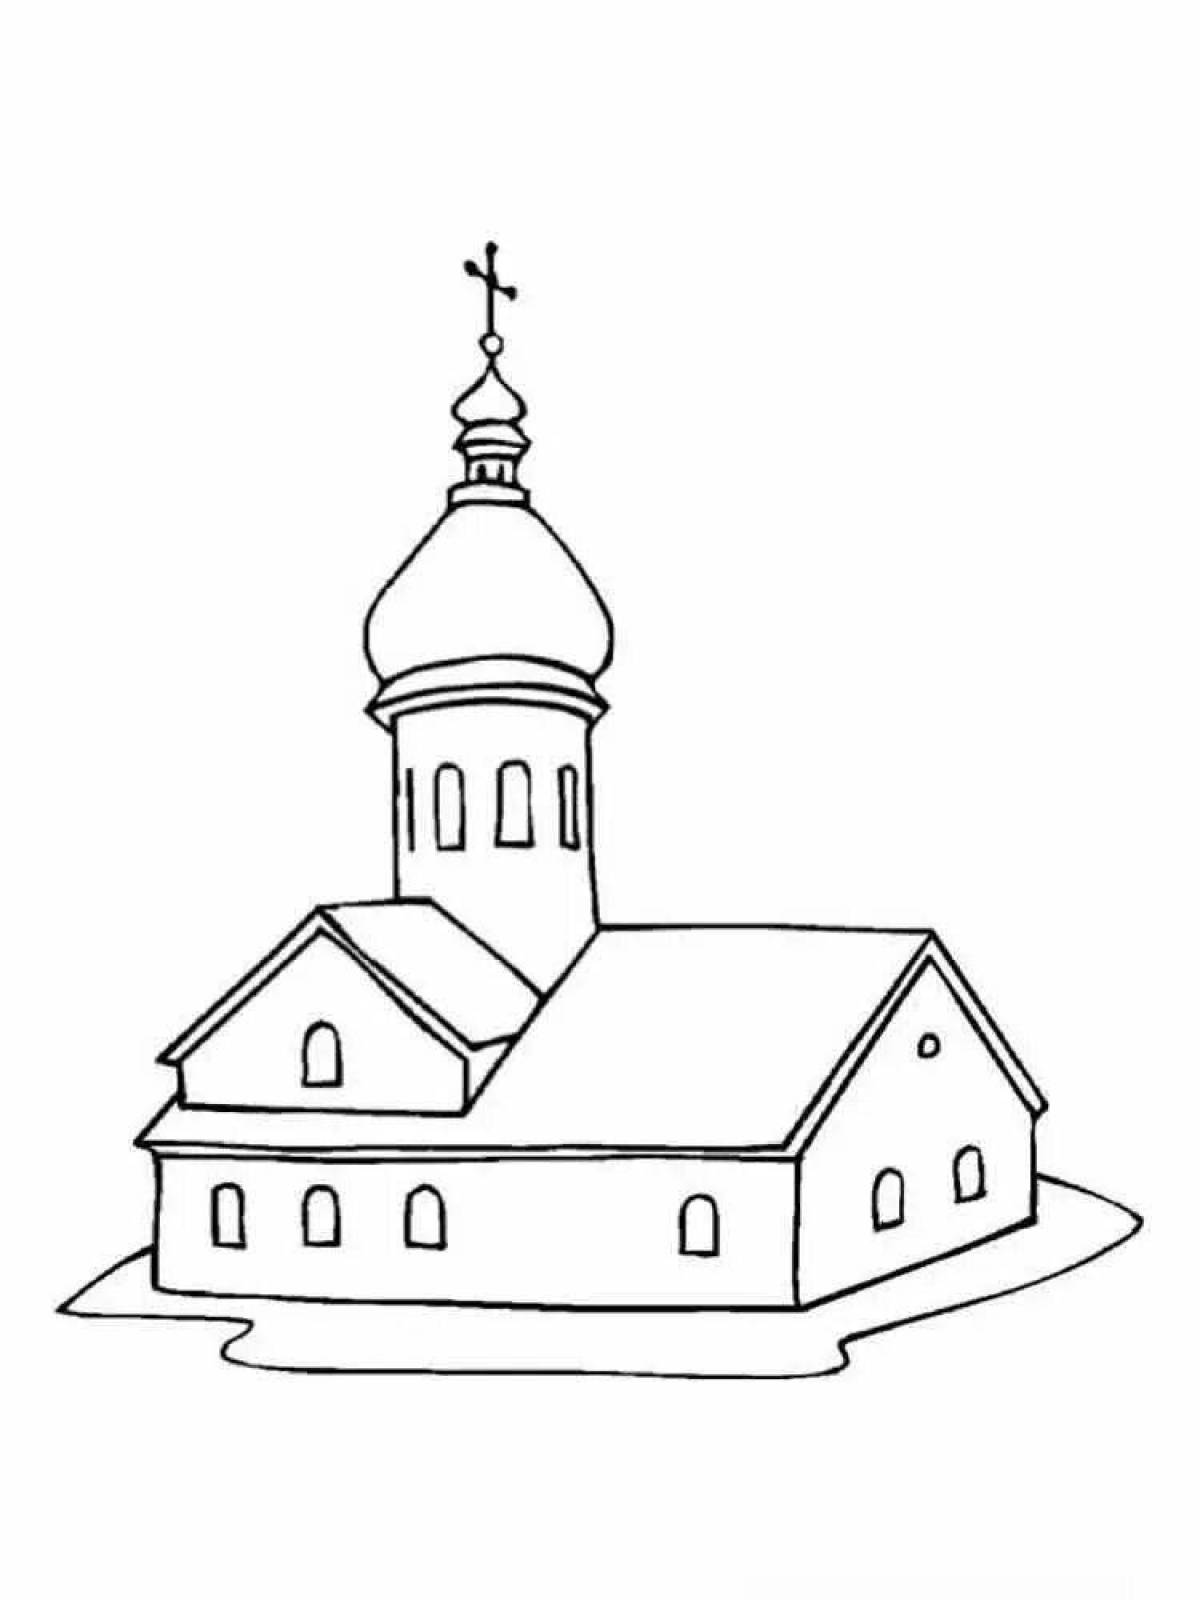 Fancy drawing of a church